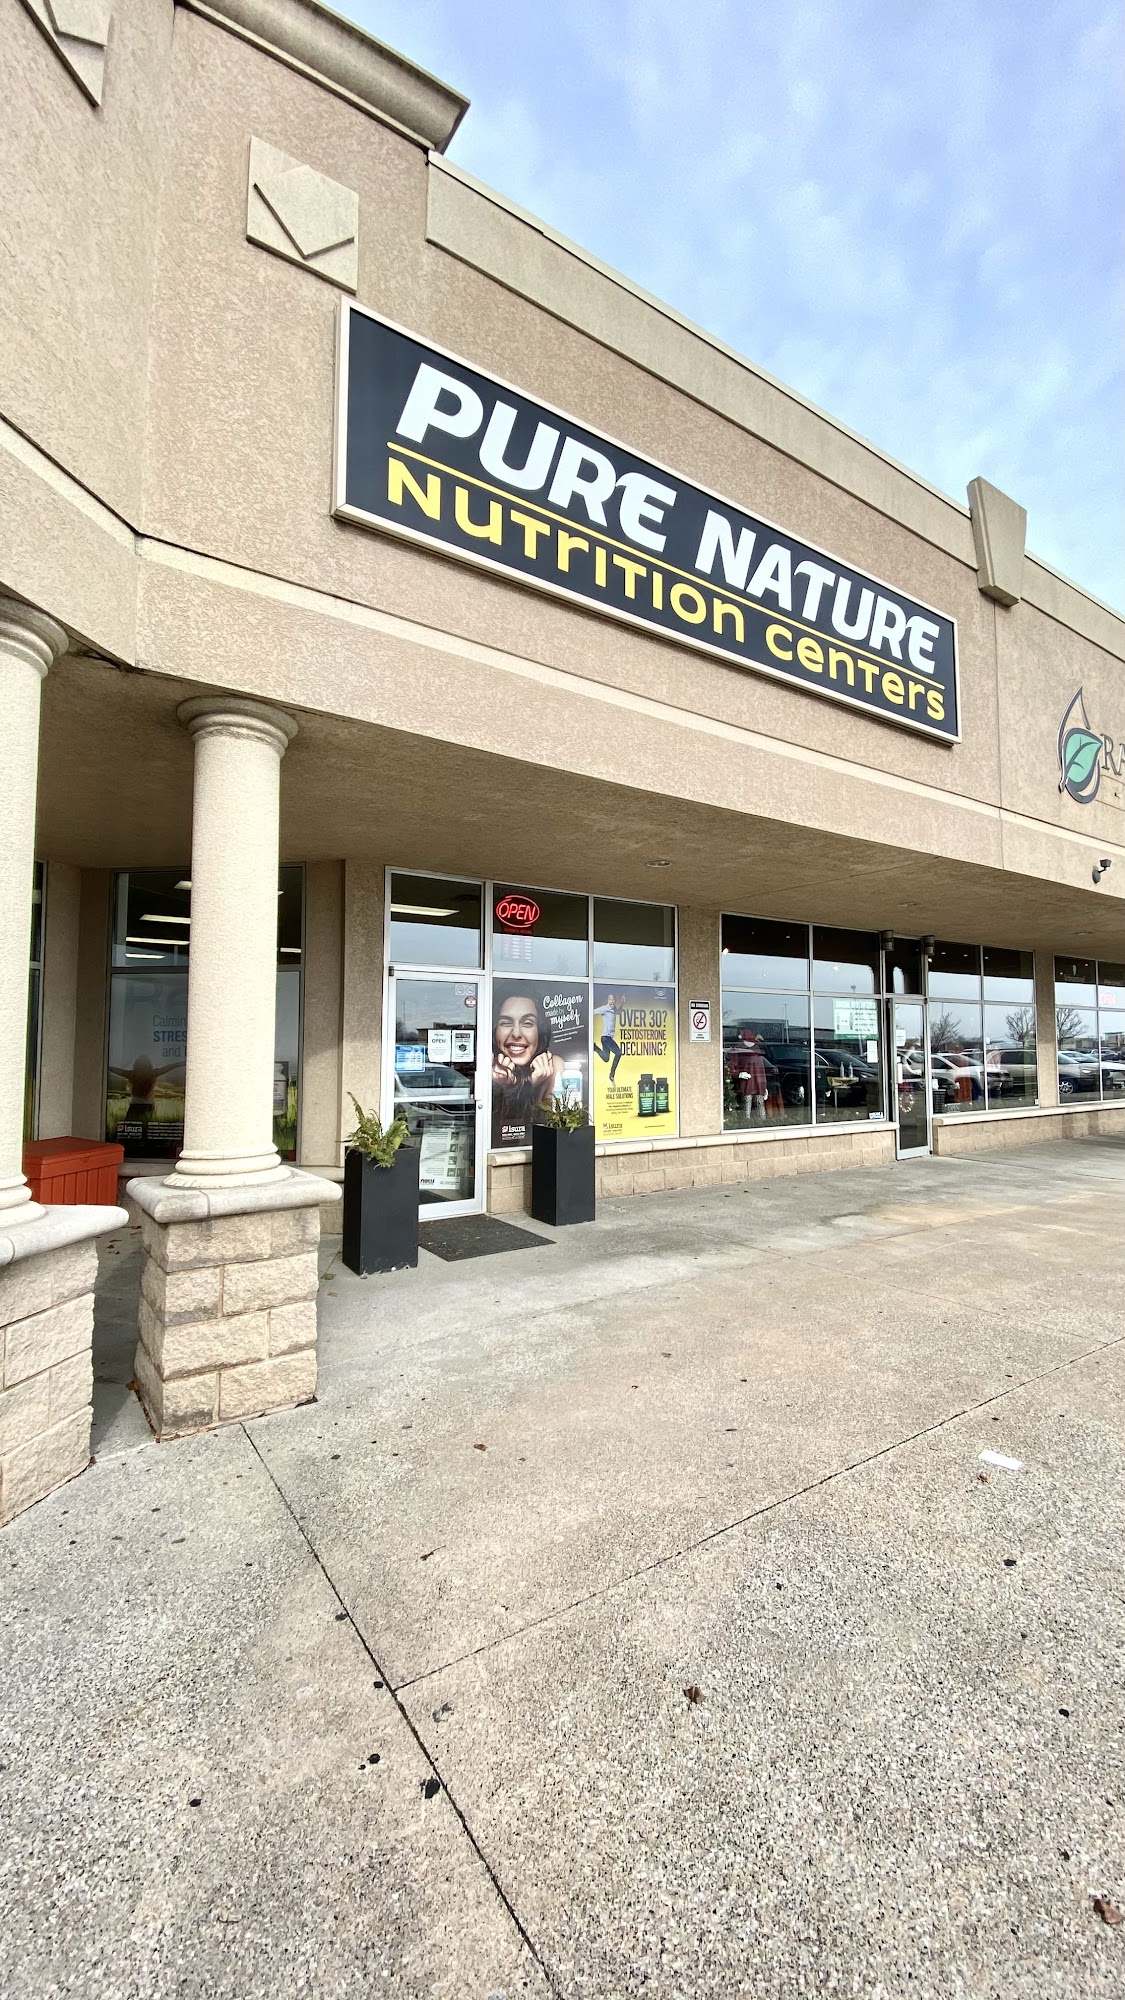 Pure Nature Nutrition Centers